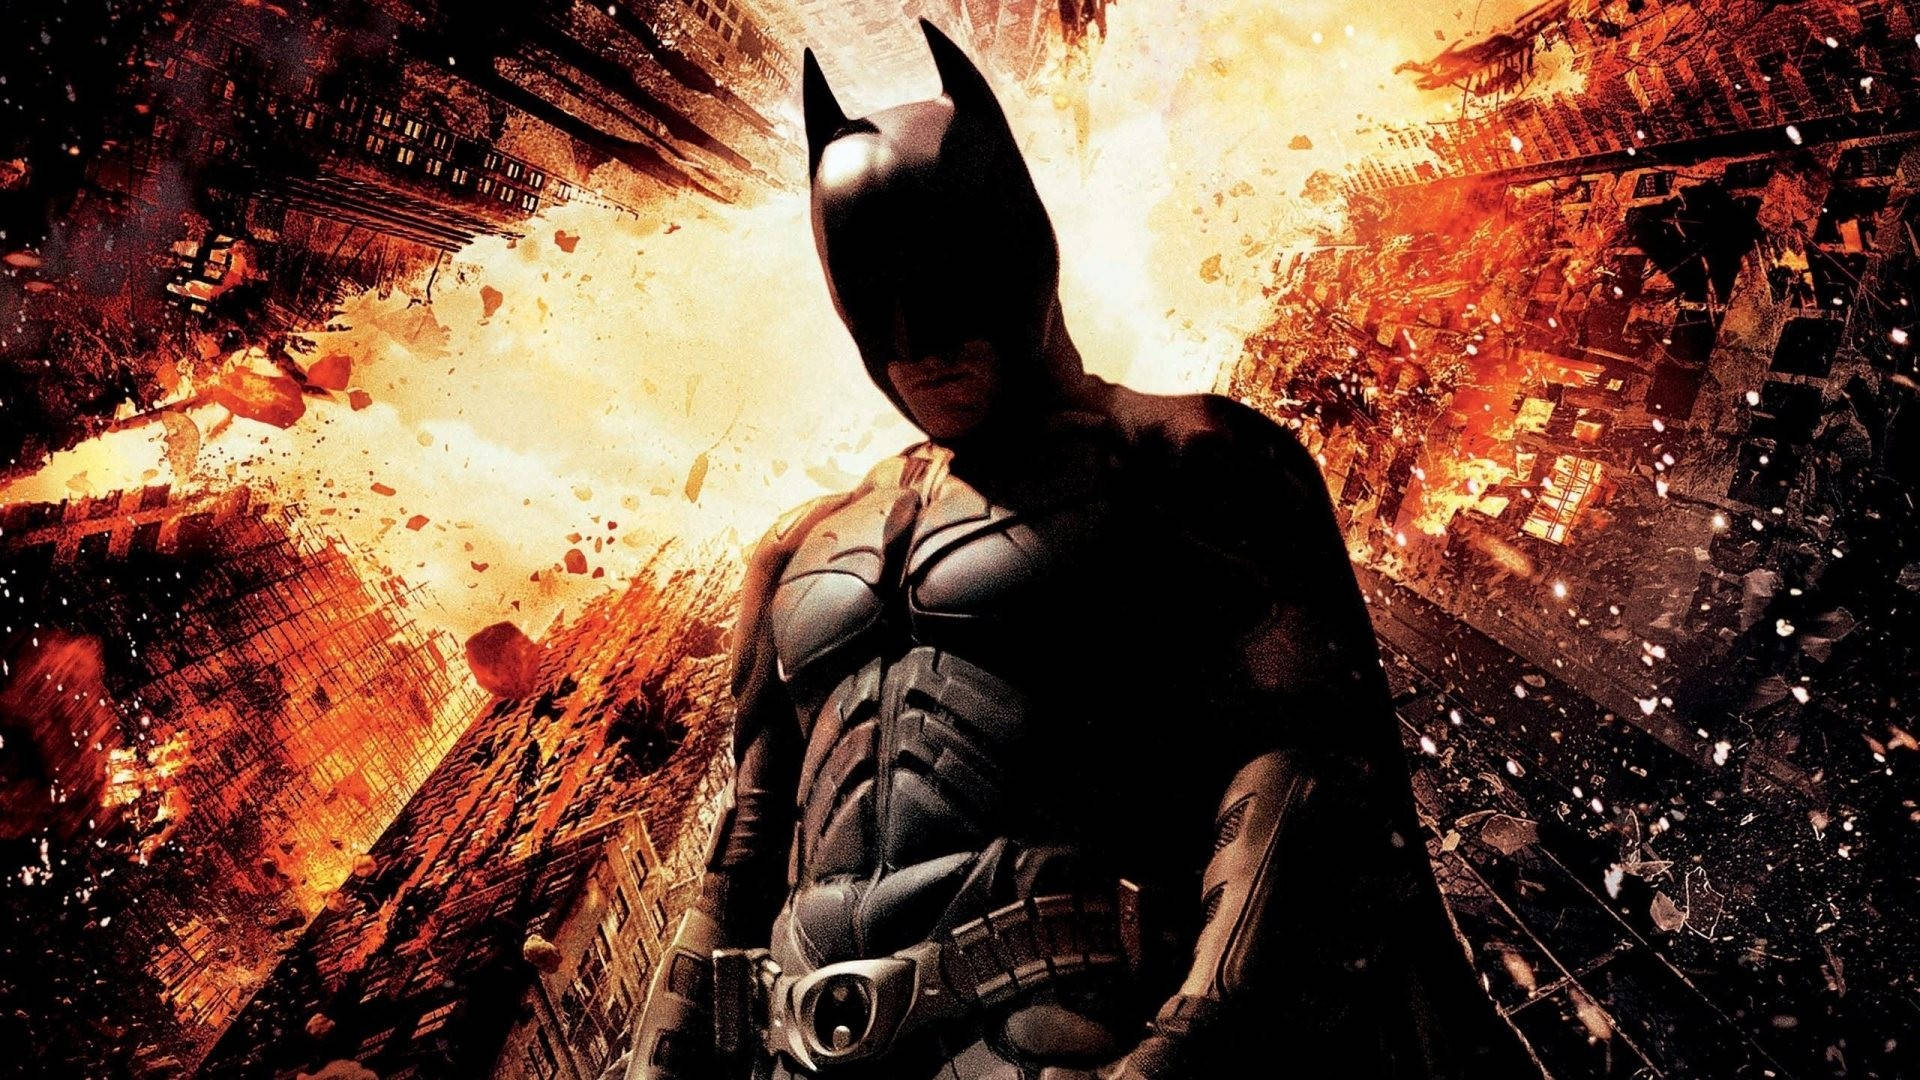 Hd Superhero The Dark Knight Background